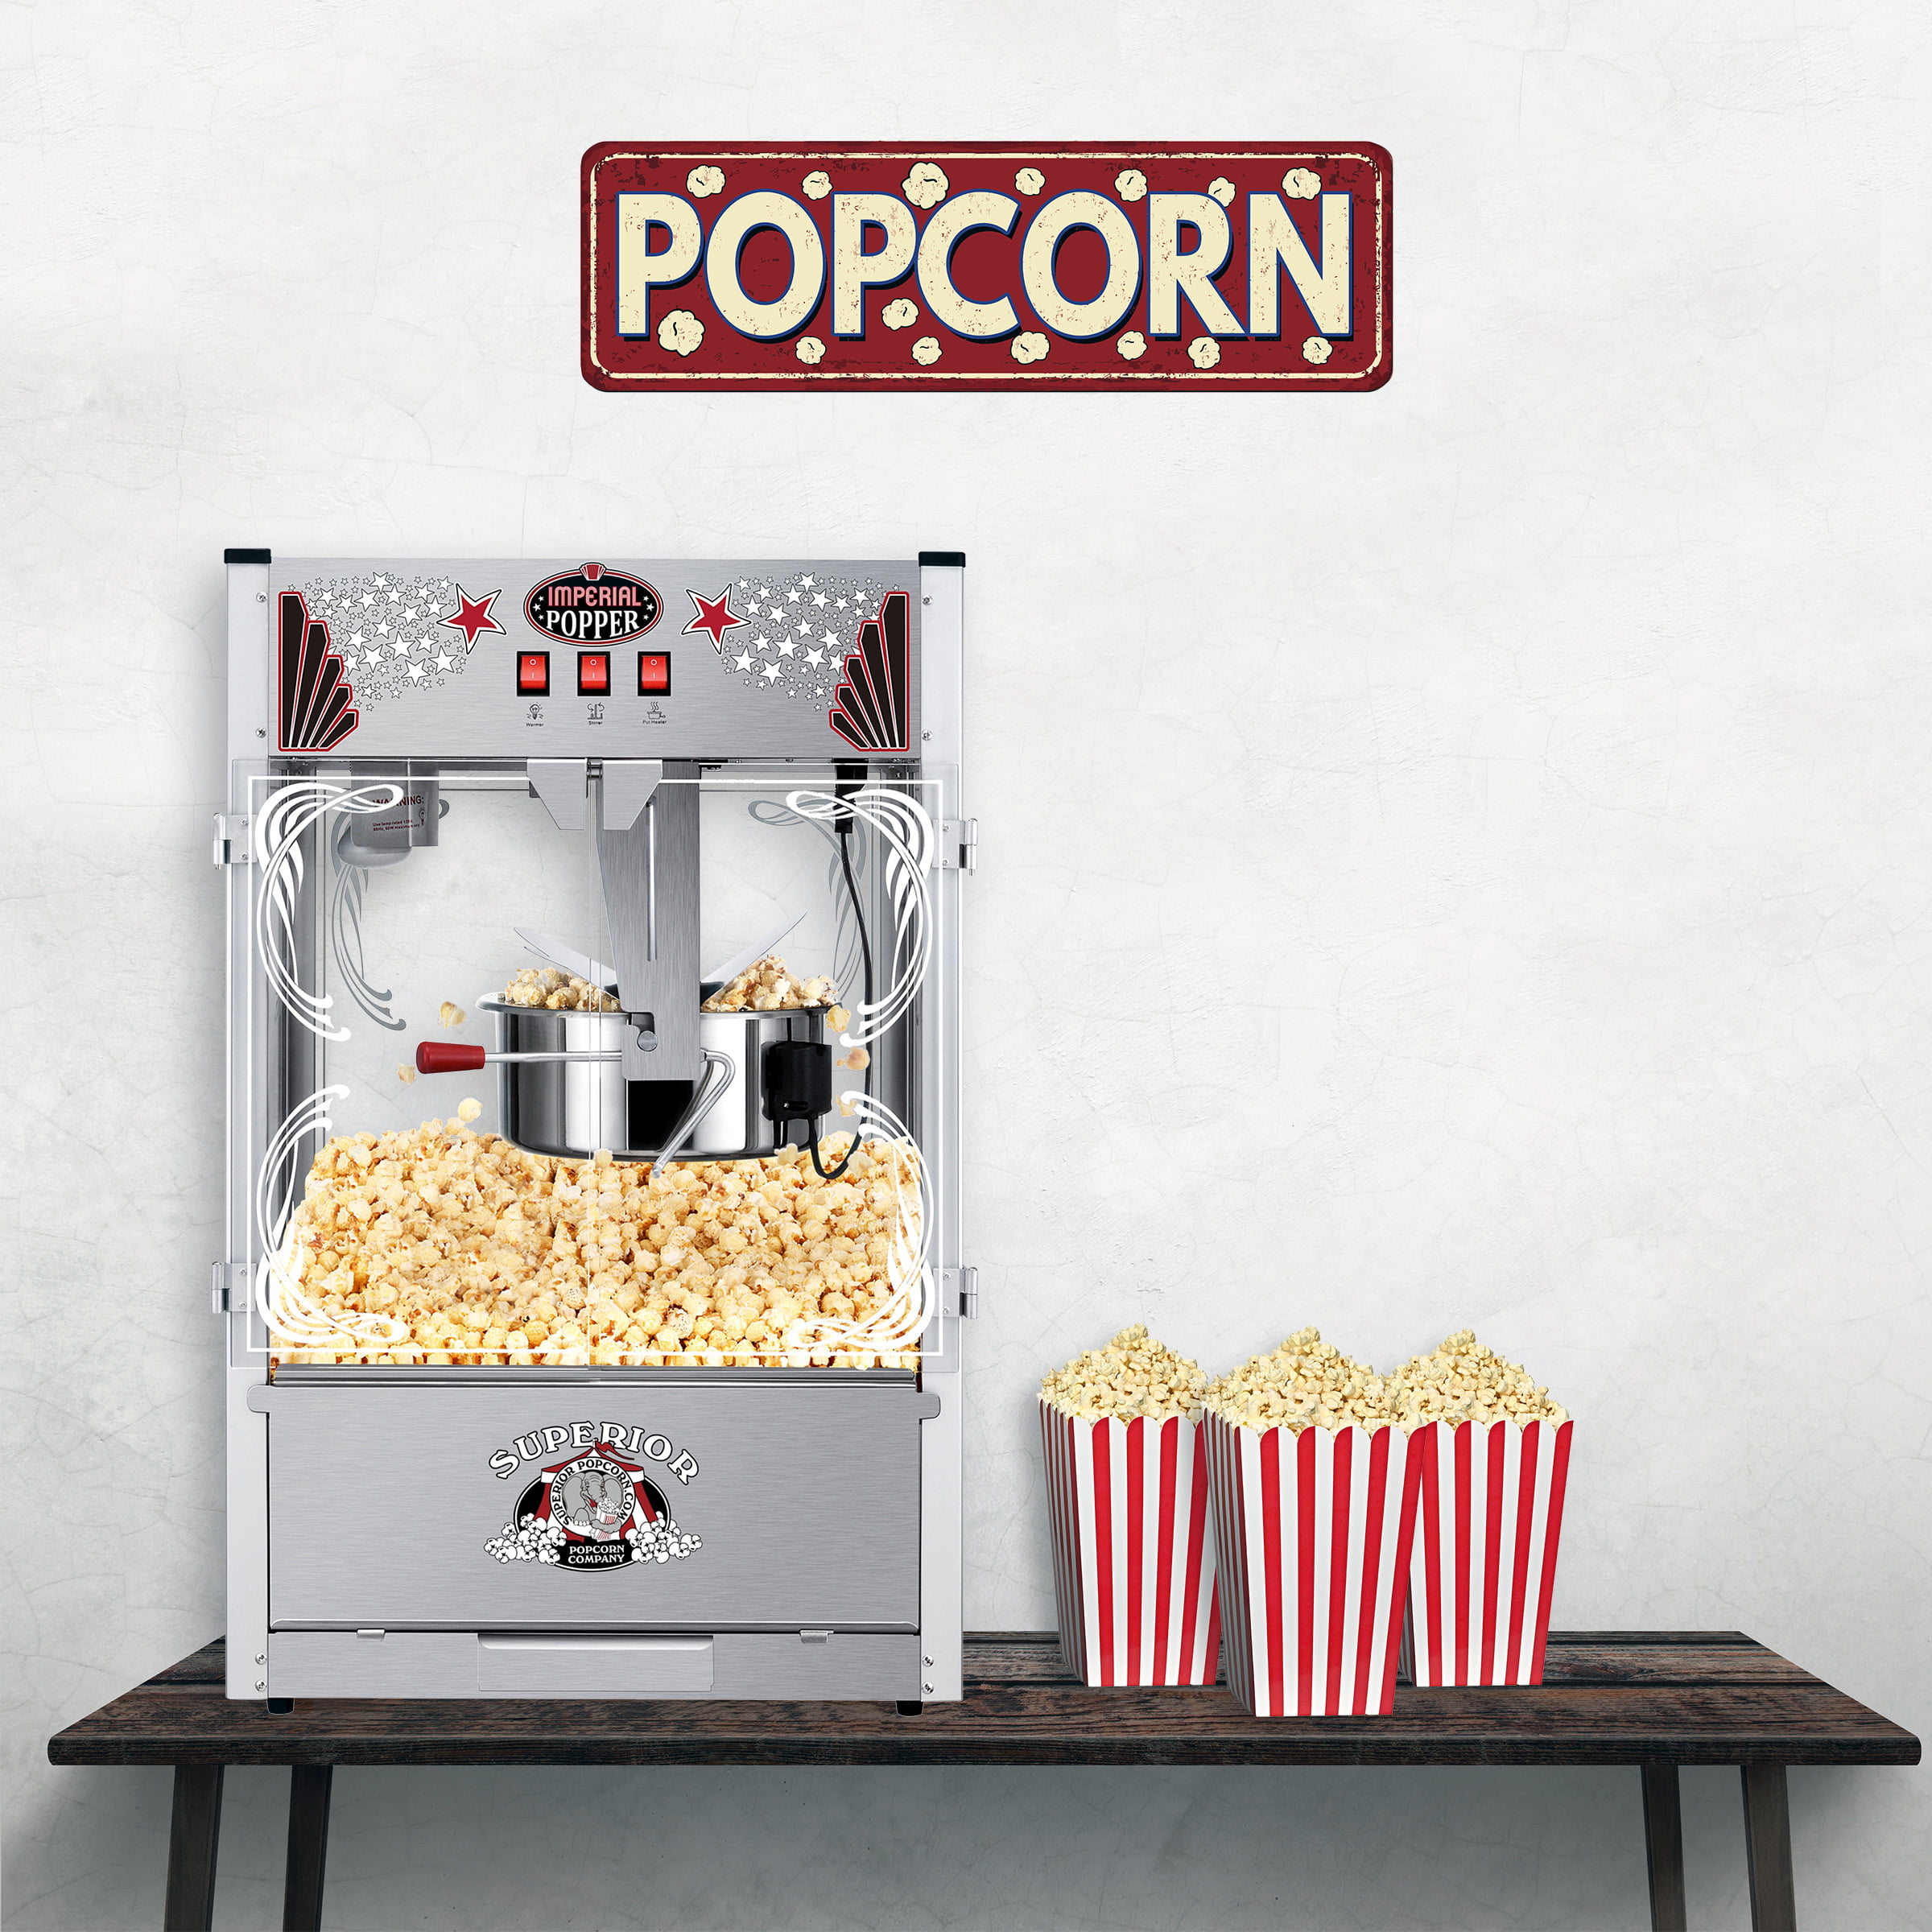 Popcorn Popper – it sauce